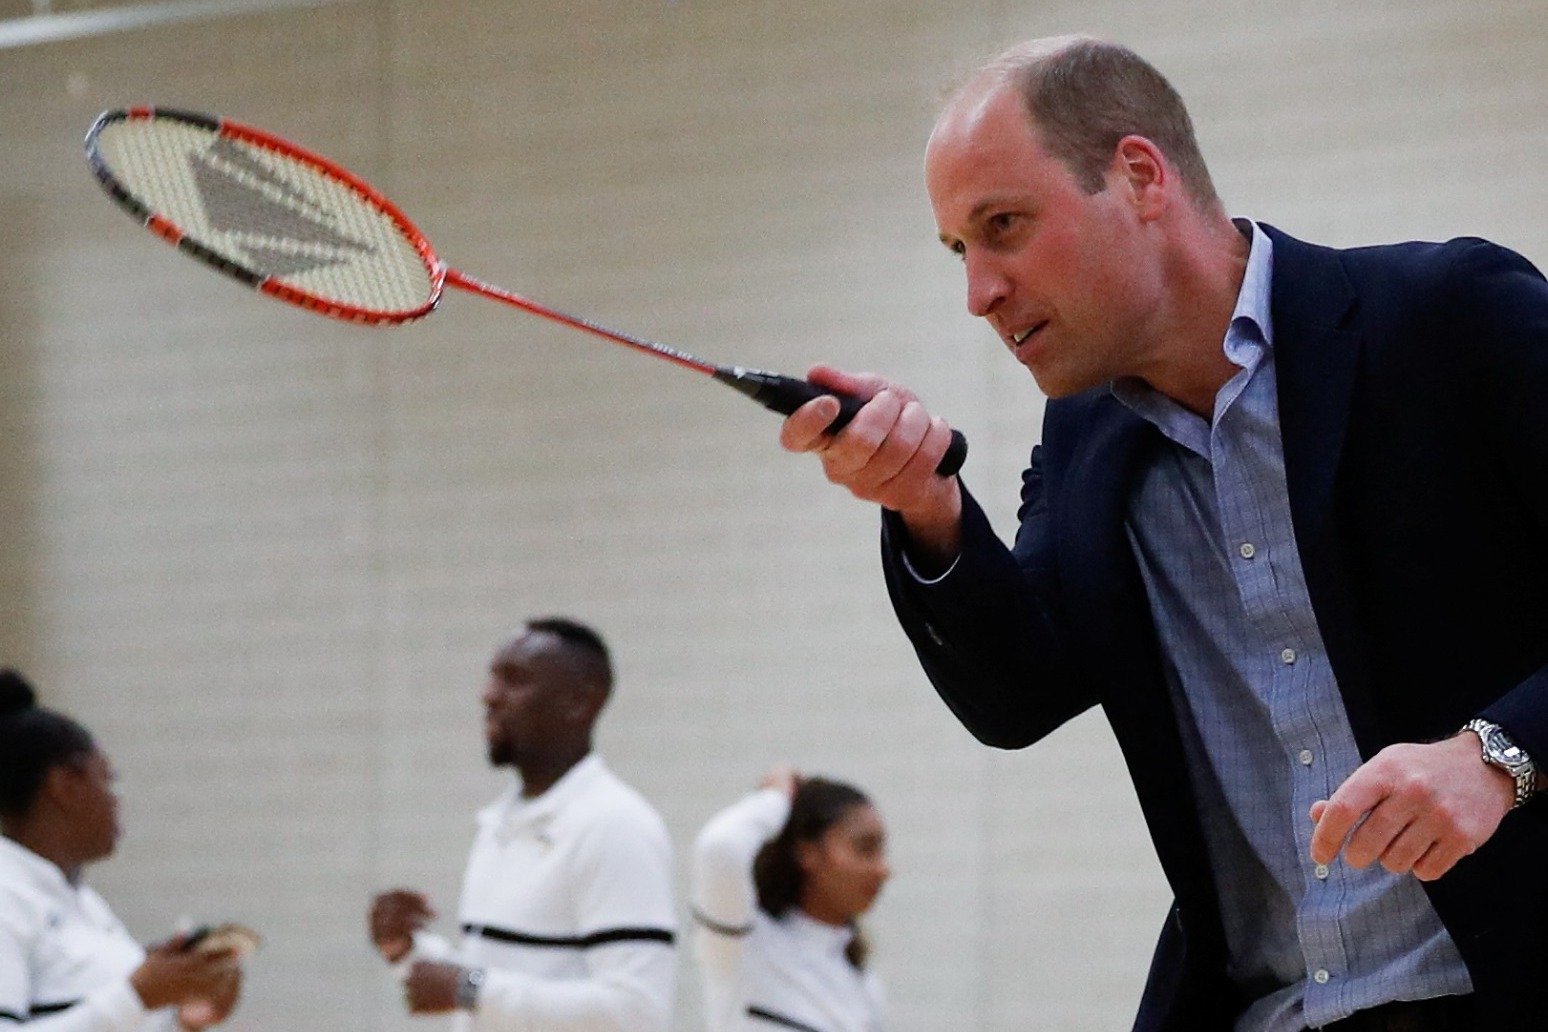 William tries luck at badminton as Birmingham prepares for Commonwealth Games 